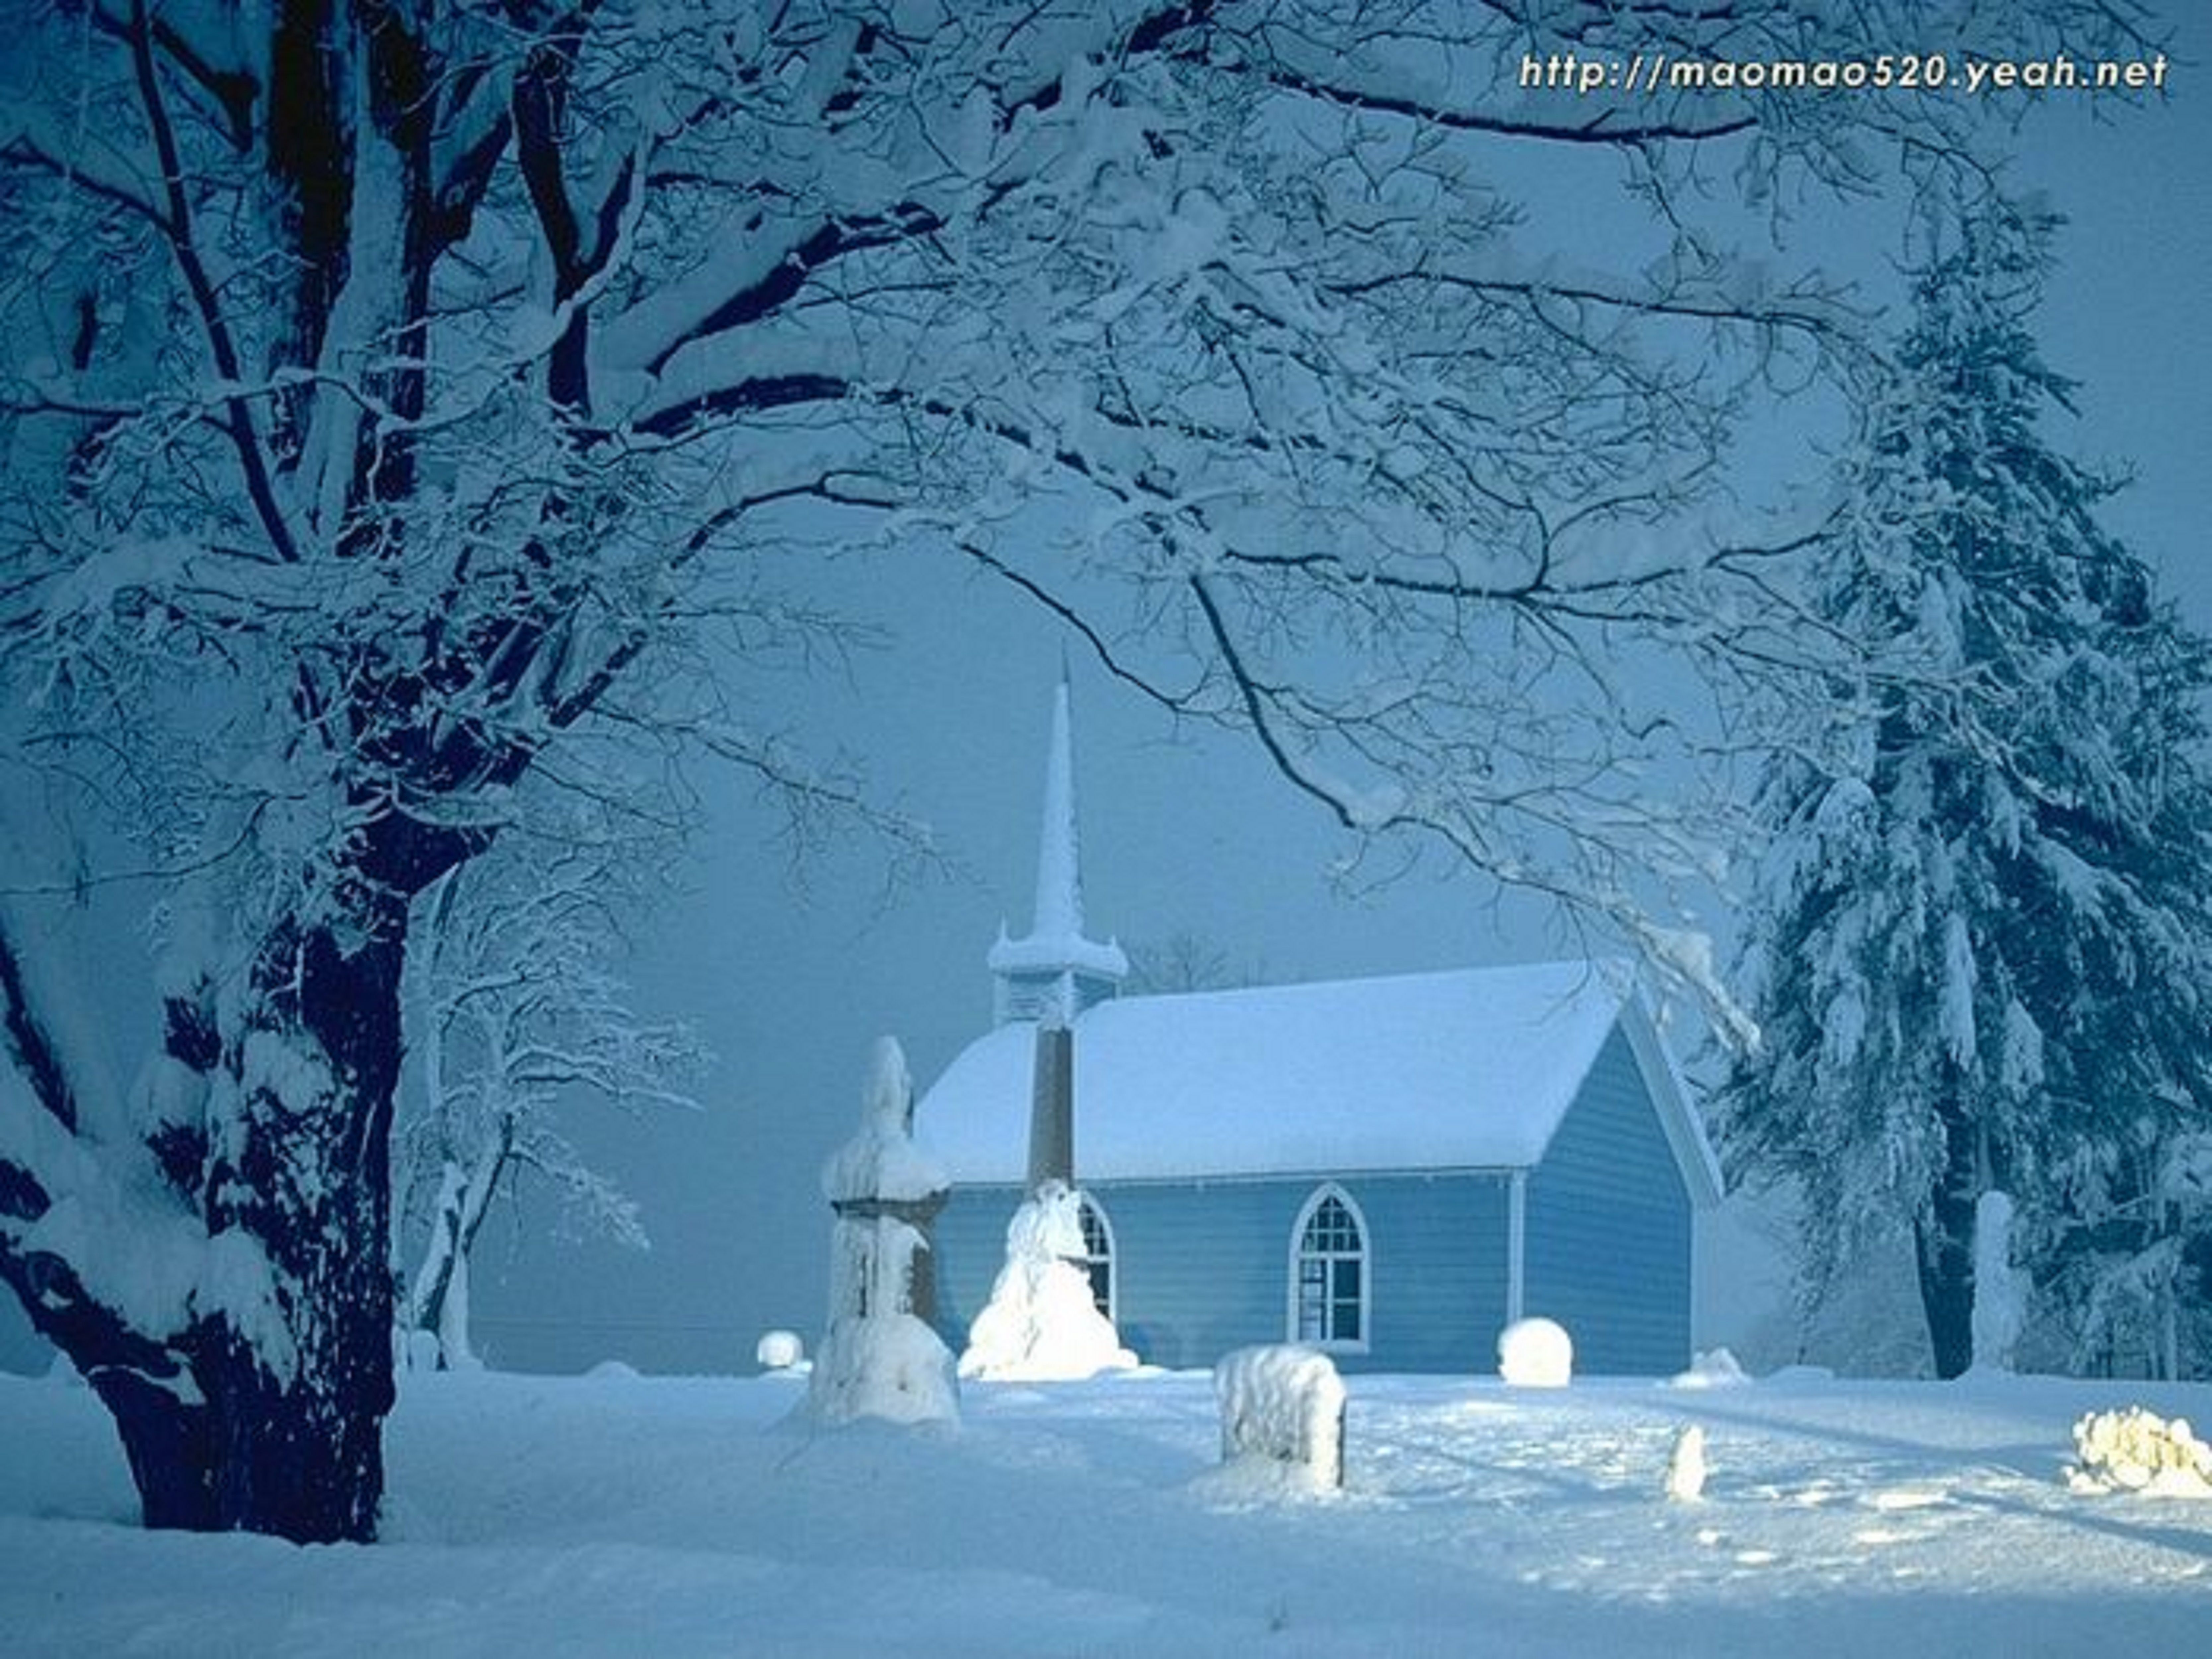 Christmas 1. Winter snow wallpaper, Winter photo, Beautiful photography nature